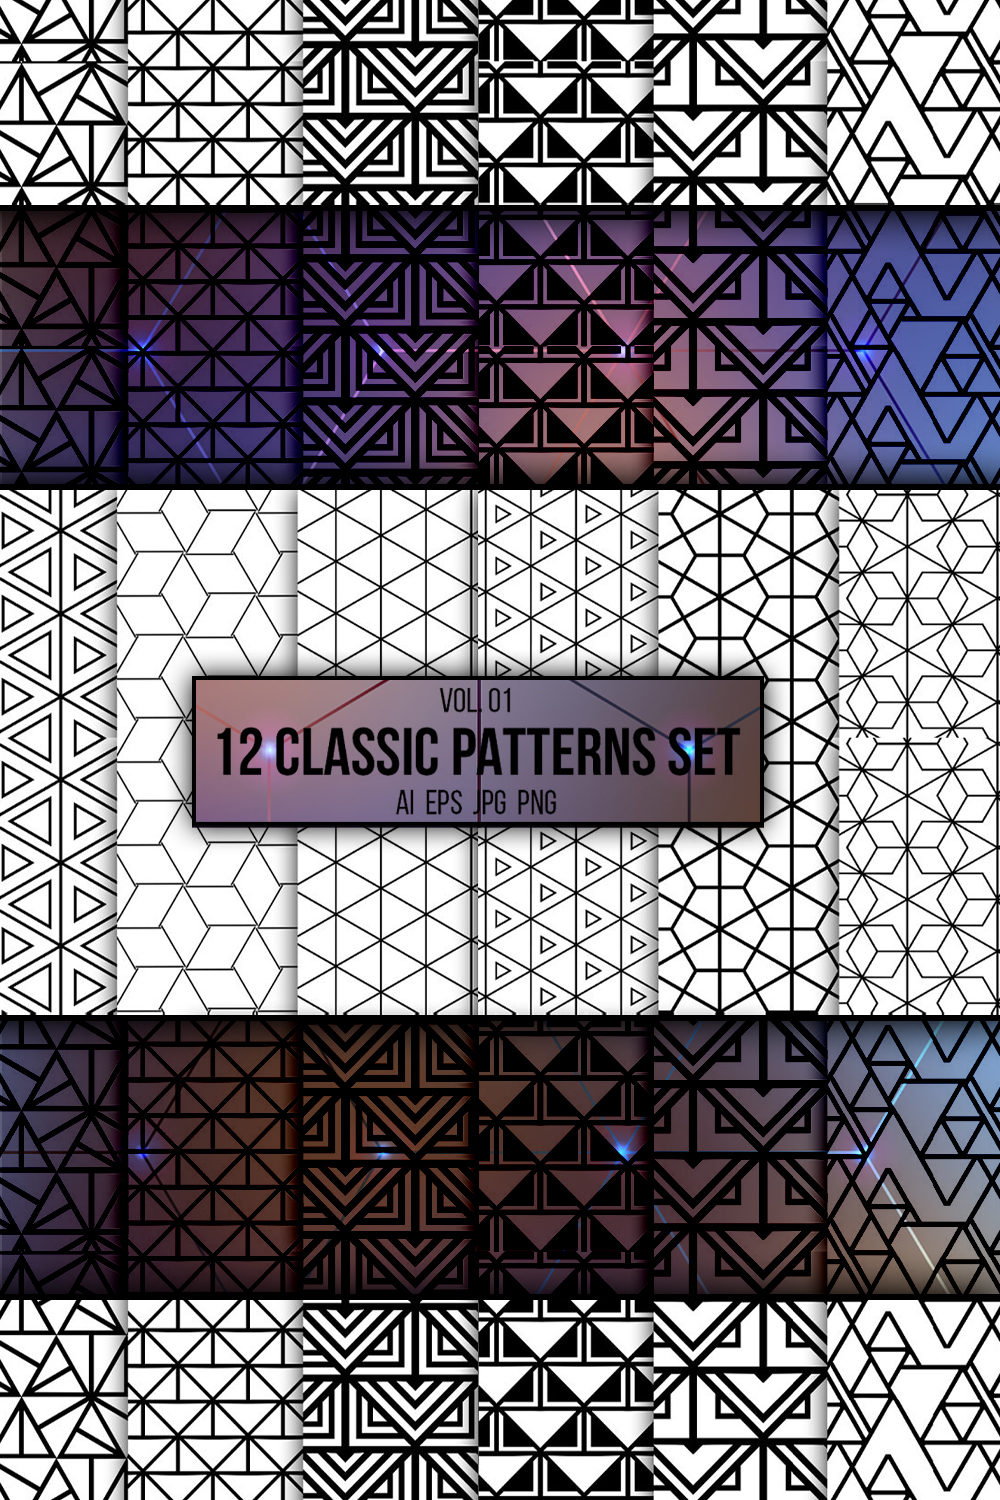 Geometric seamless patterns of pinterest.